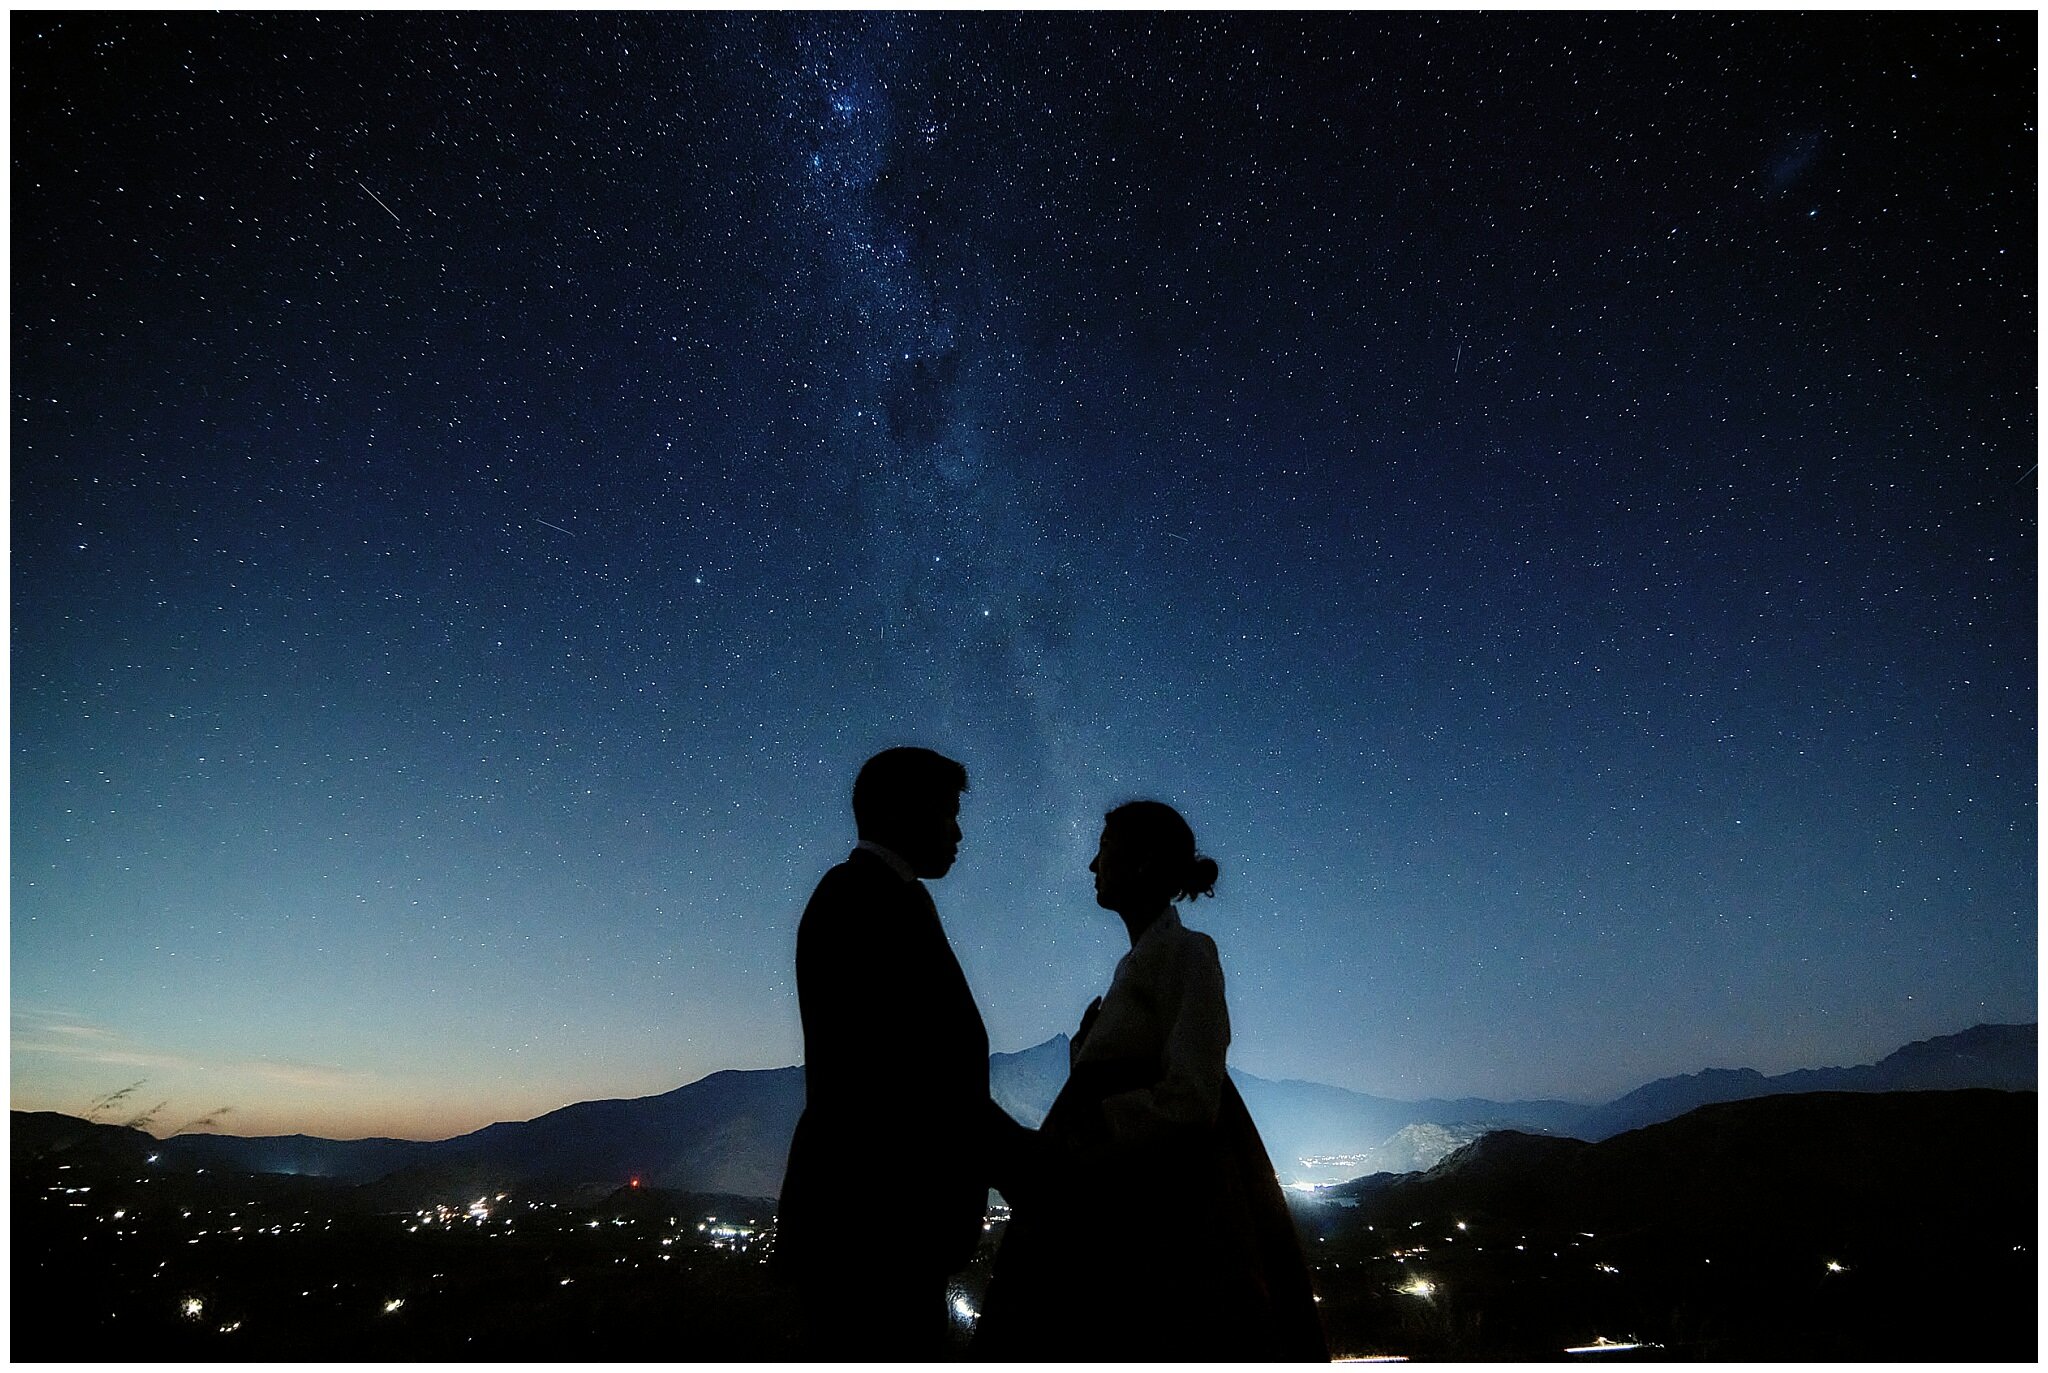 New Zealand South Island Queenstown Starry Night Milkyway Galaxy Pre-Wedding Shoot Photographer 뉴질랜드 퀸즈타운 헬리콥터 웨딩 스냅 사진 포토 그래퍼 (Copy)